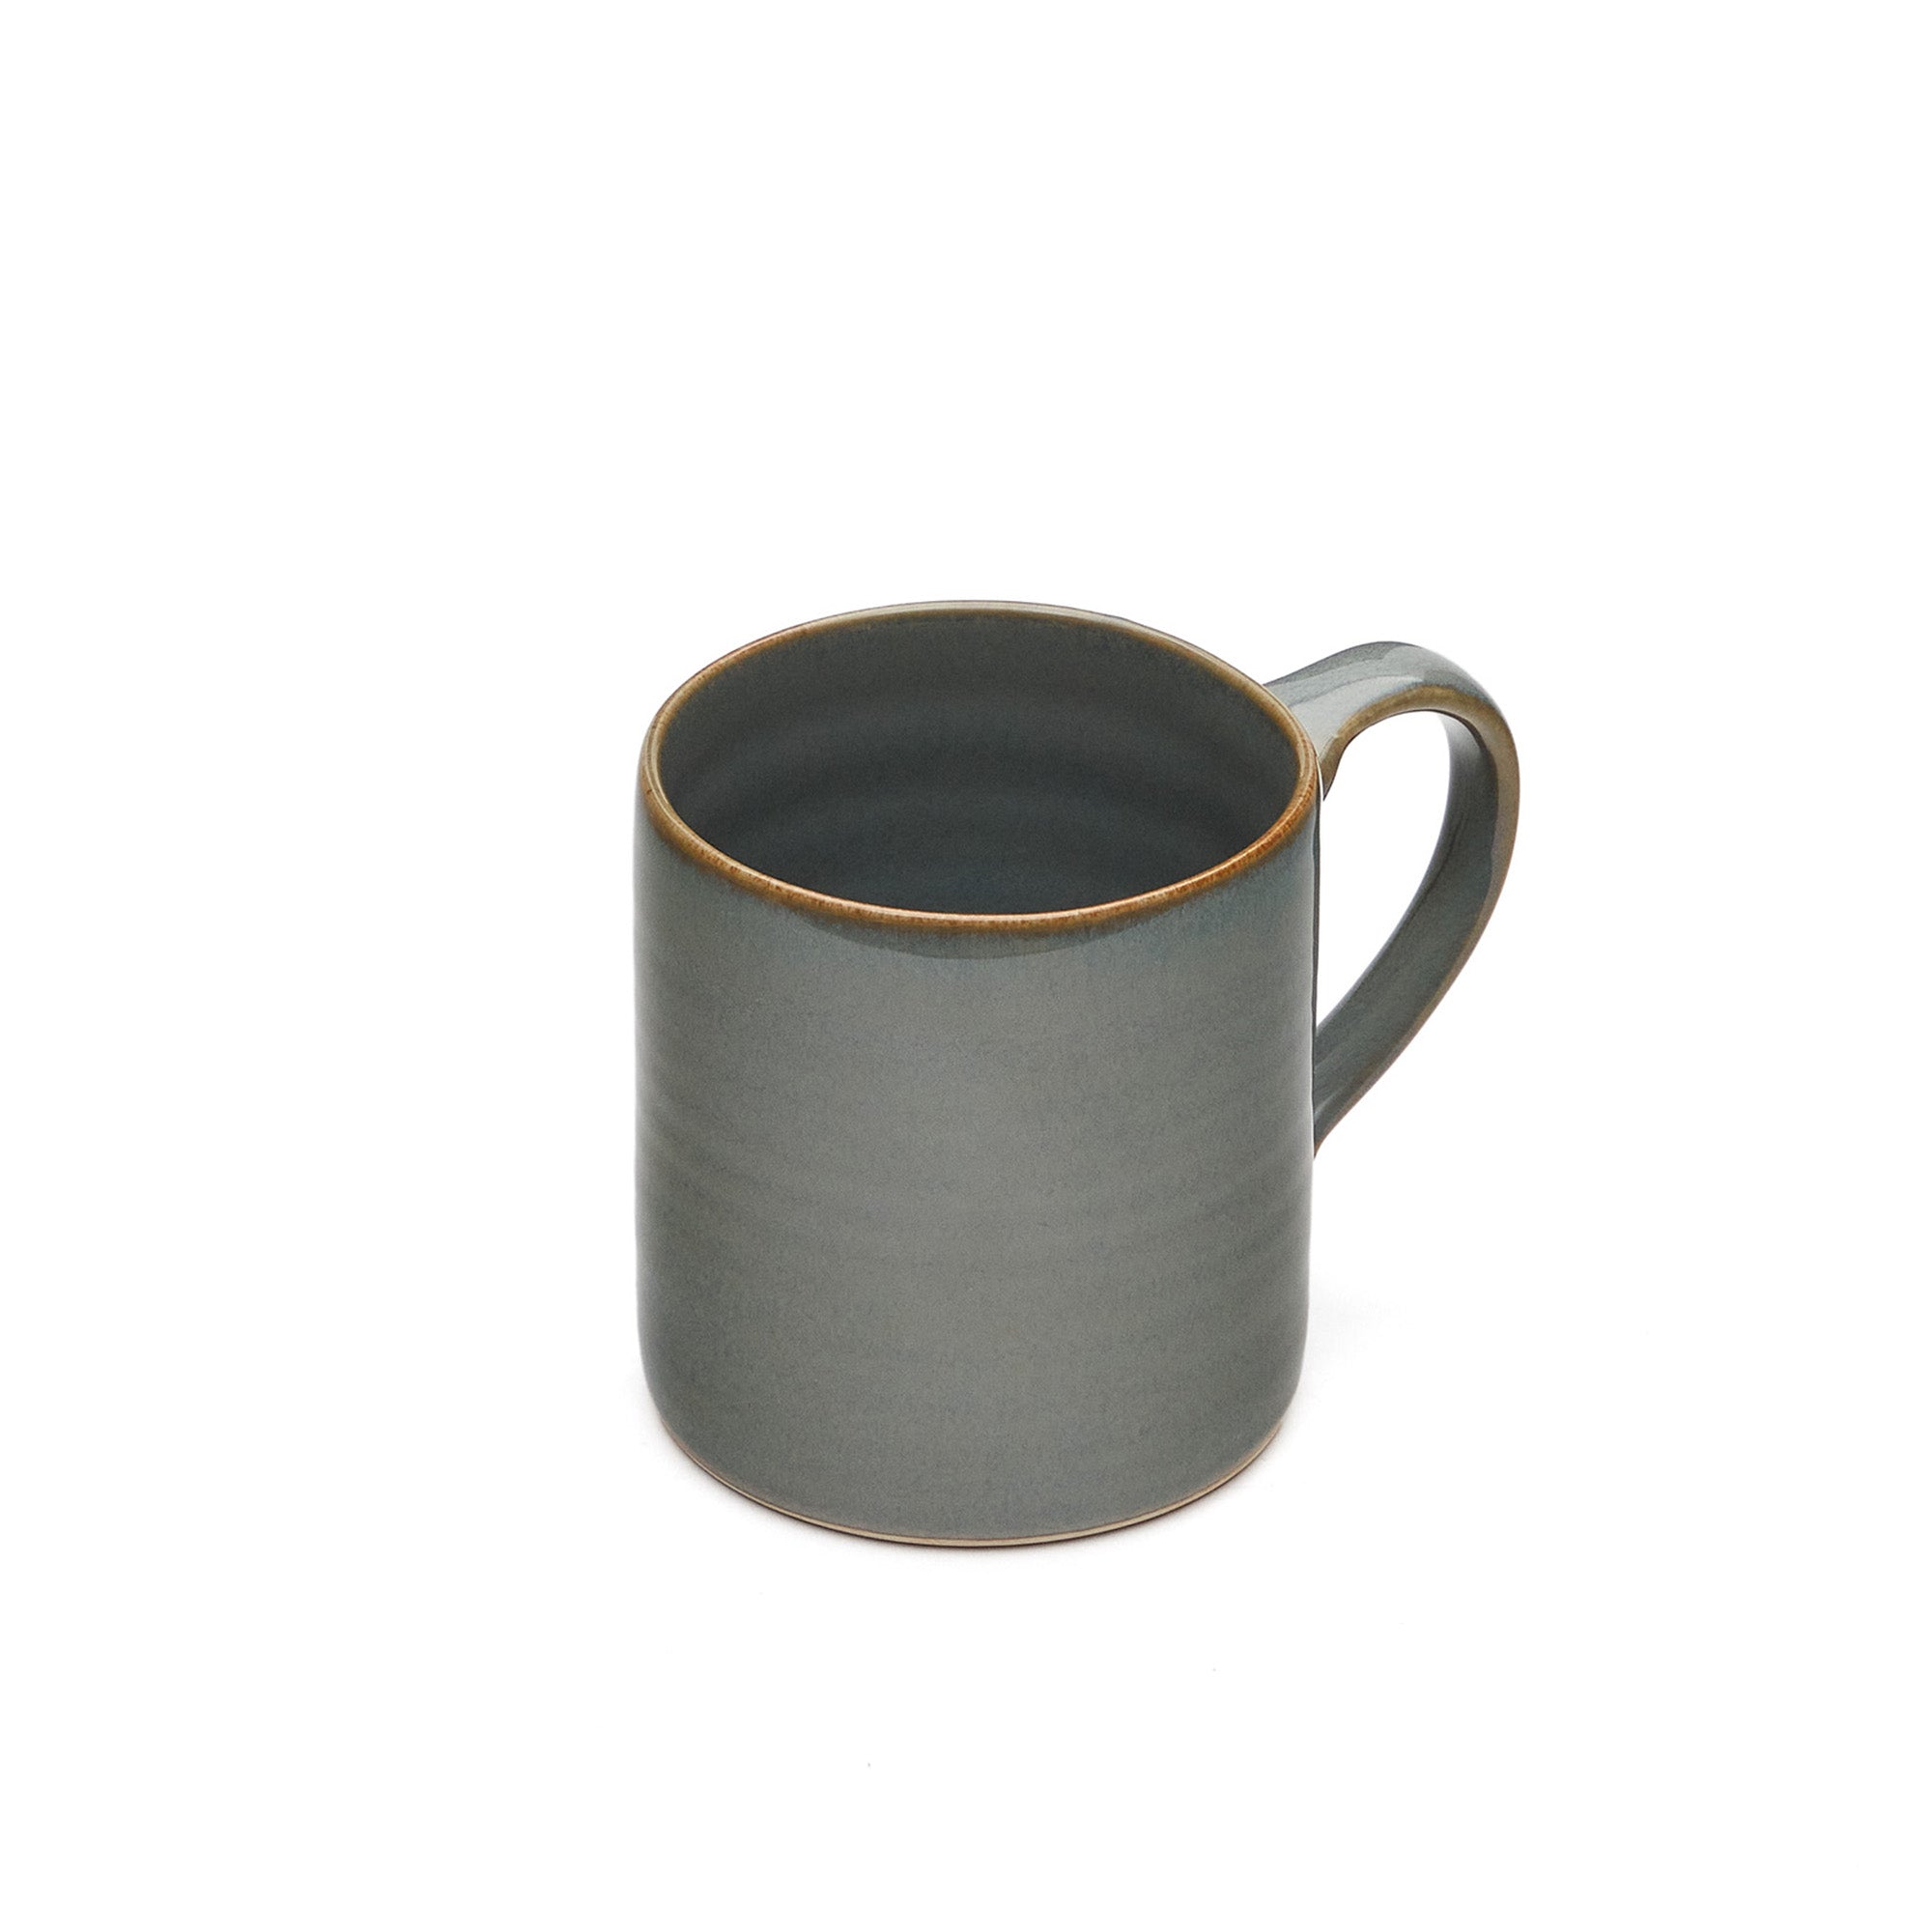 Lescala ceramic mug in blue